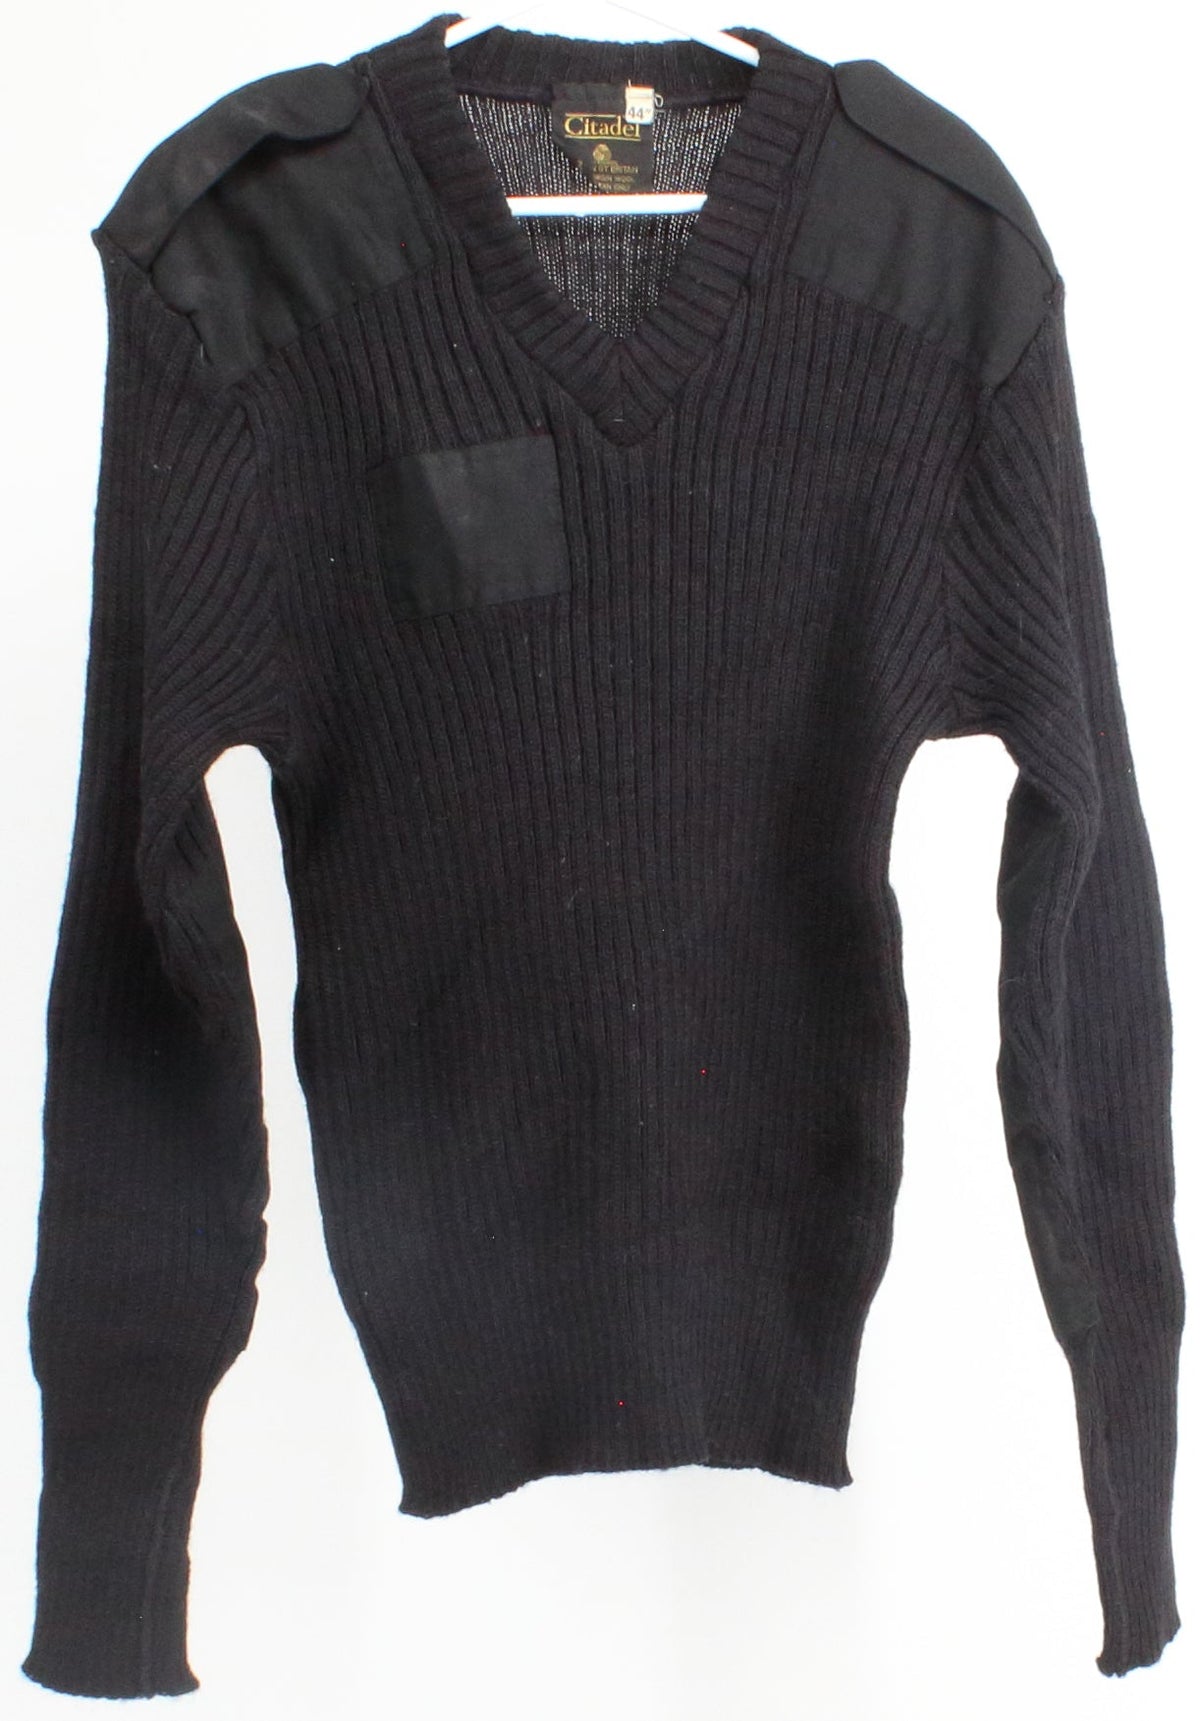 Citadel Black V-Neck Sweater 44